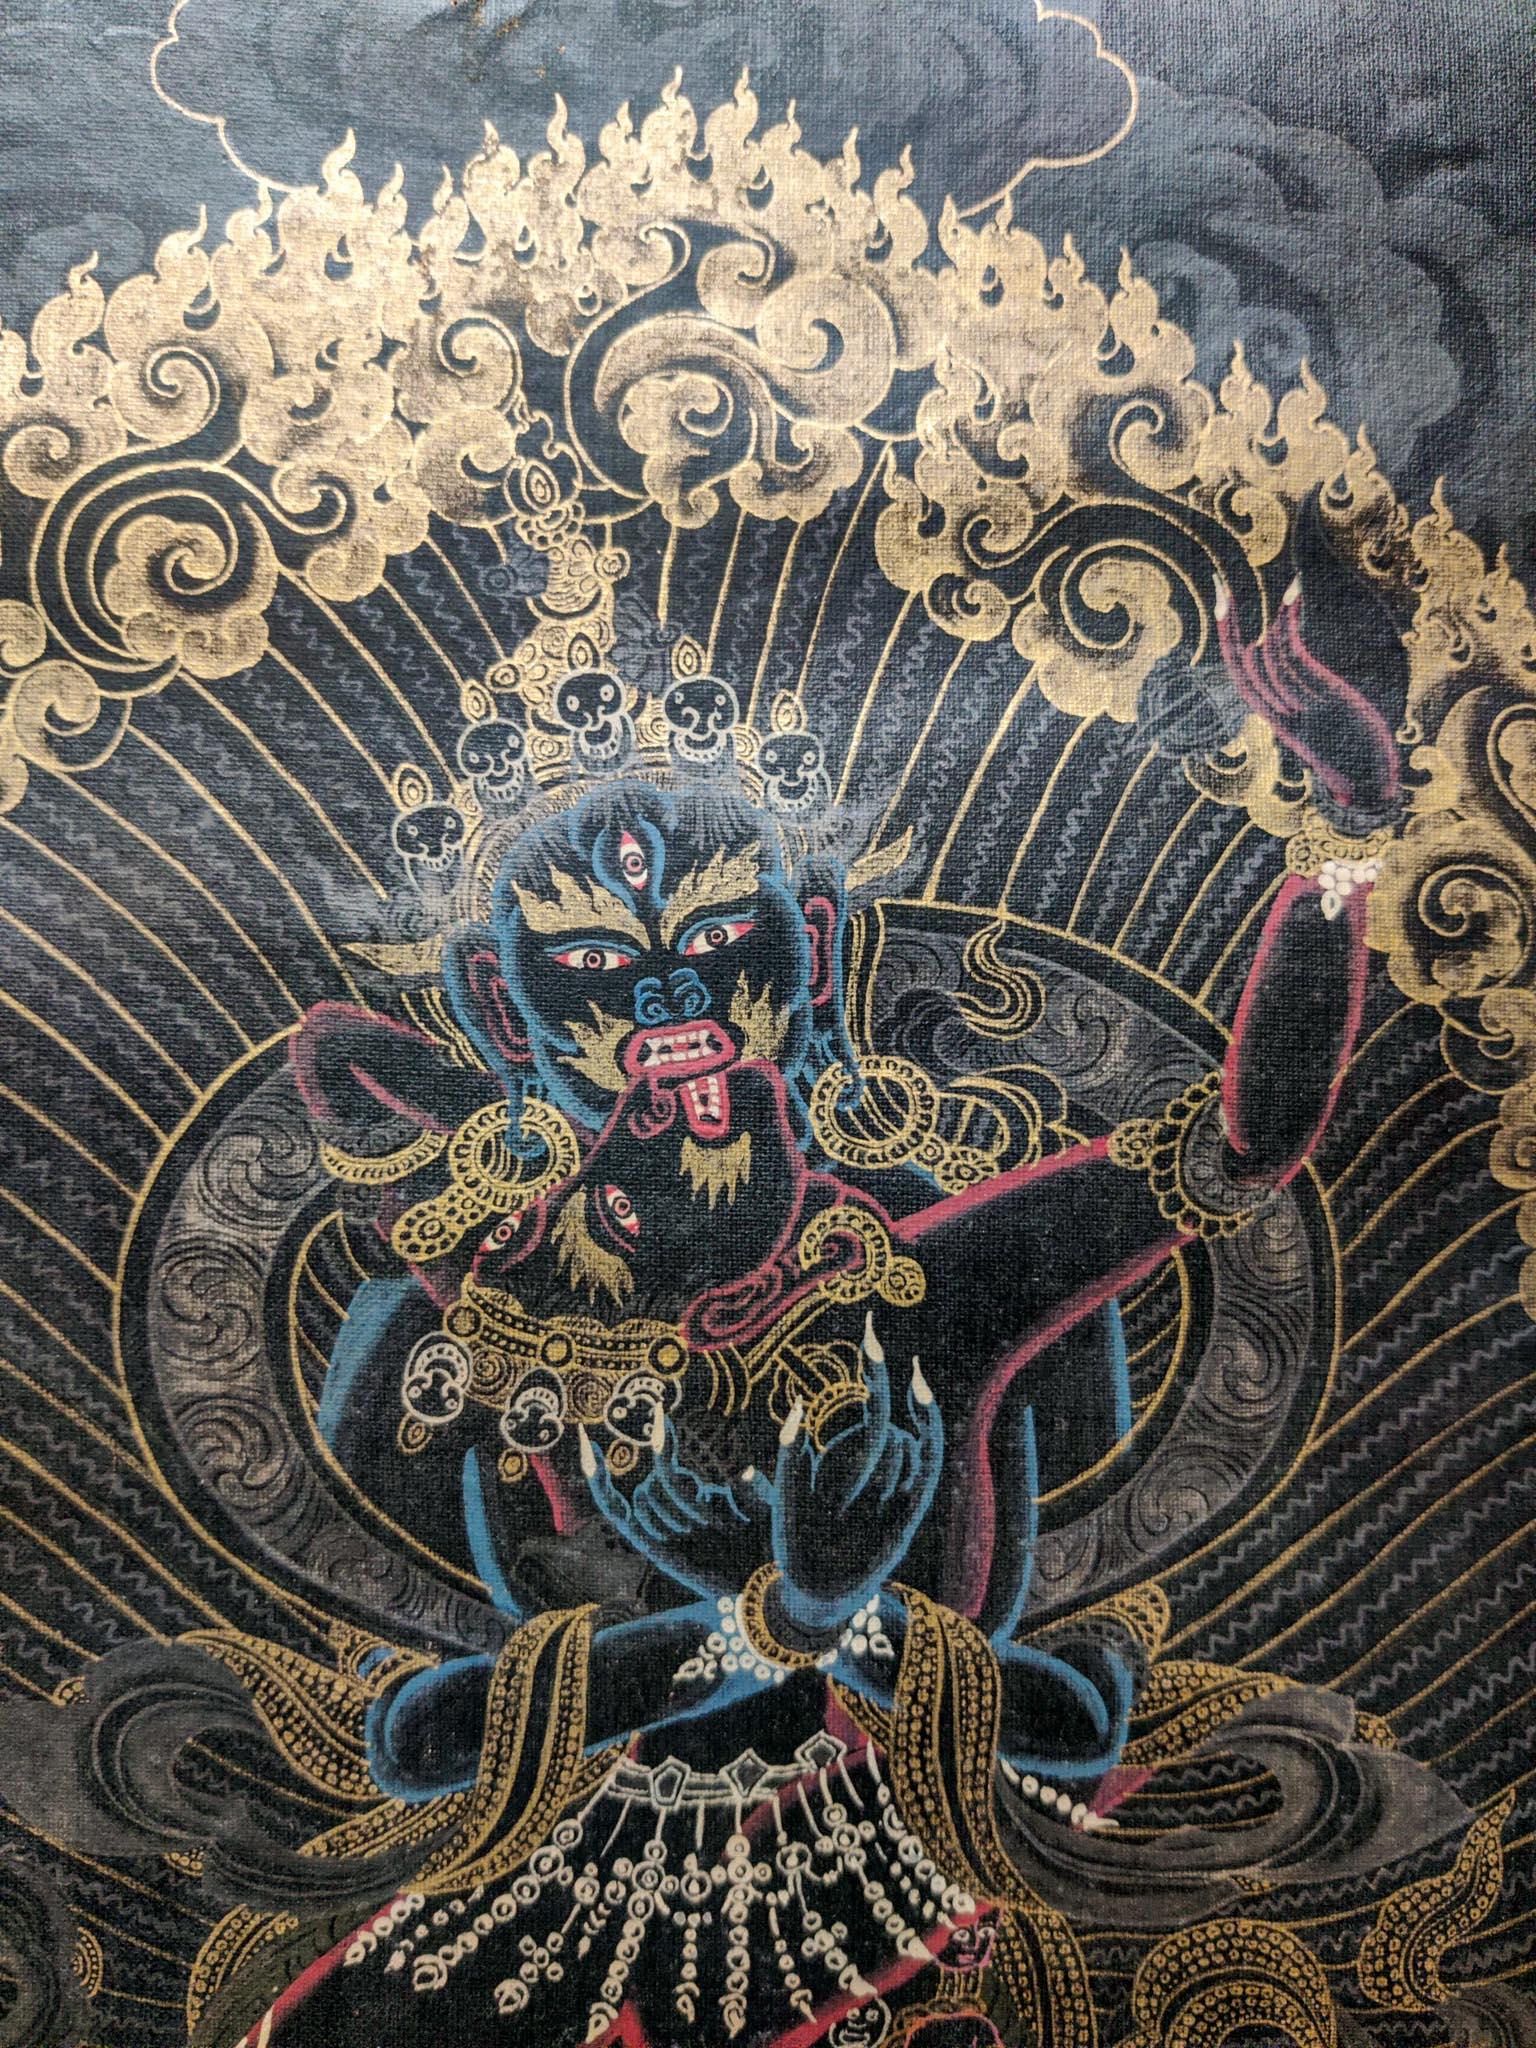 The union of Cakrasamvara and Vajravarahi Thangka Painting